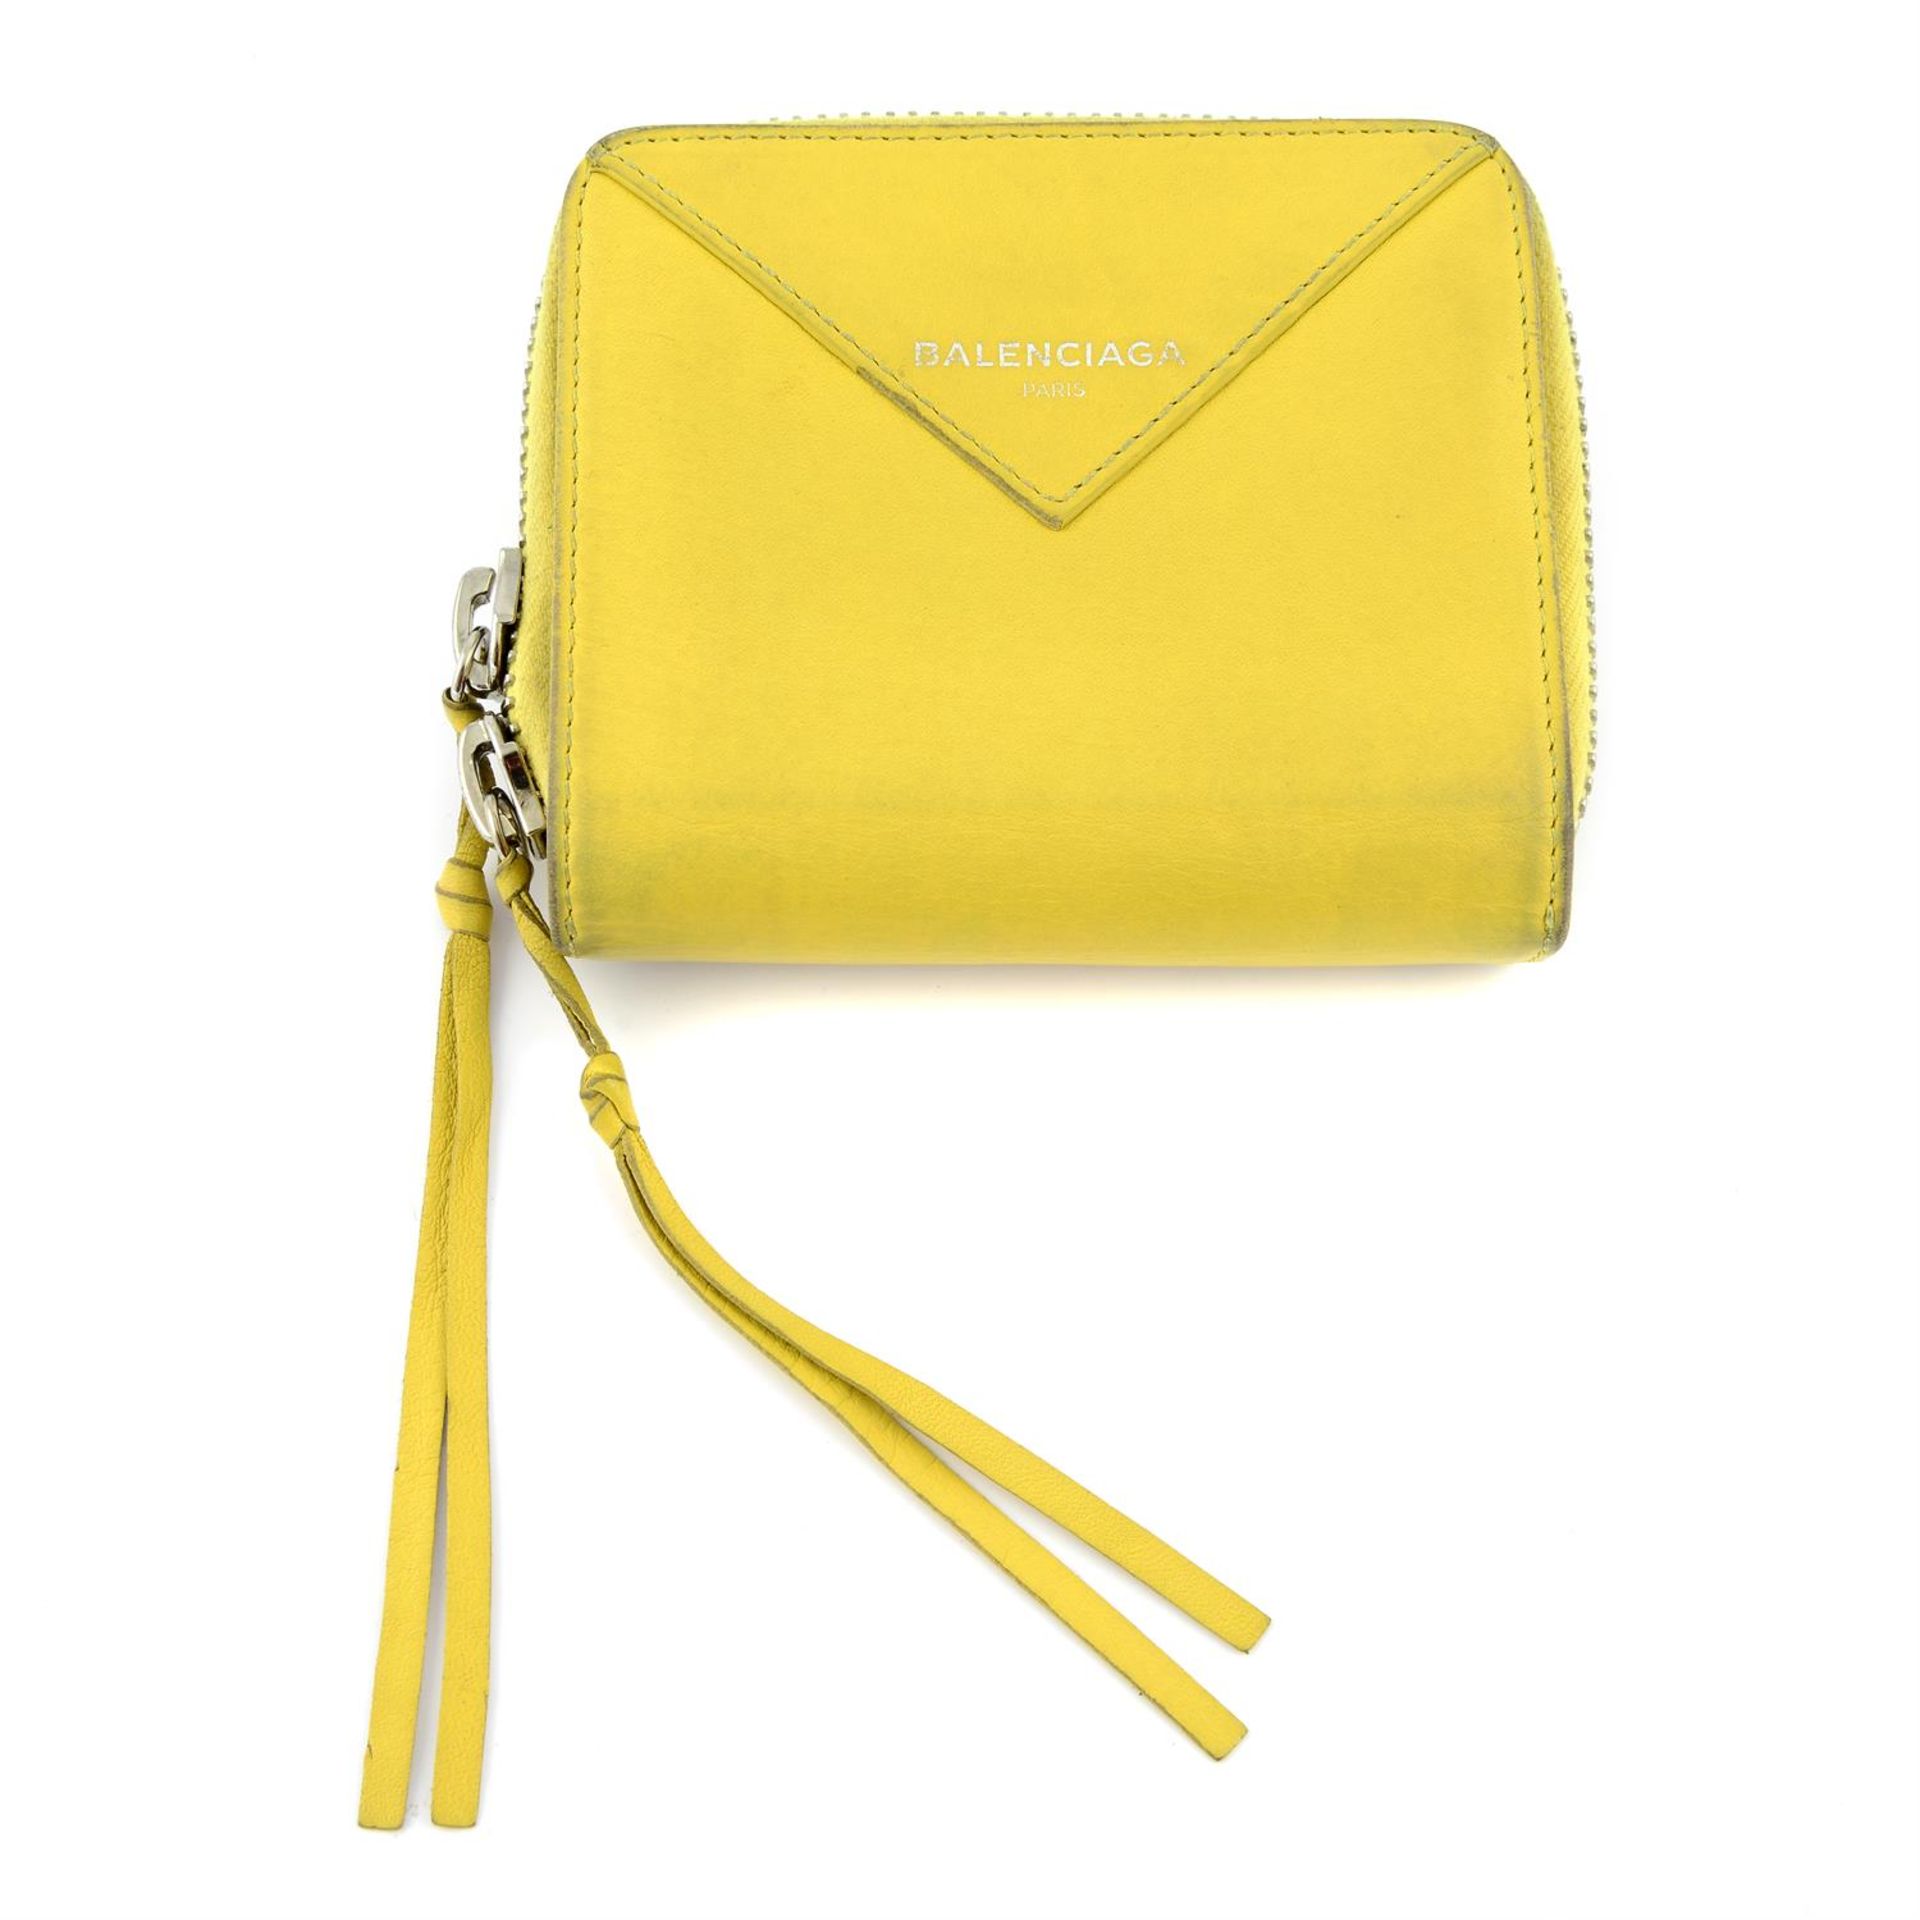 BALENCIAGA - a chartreuse leather compact wallet.